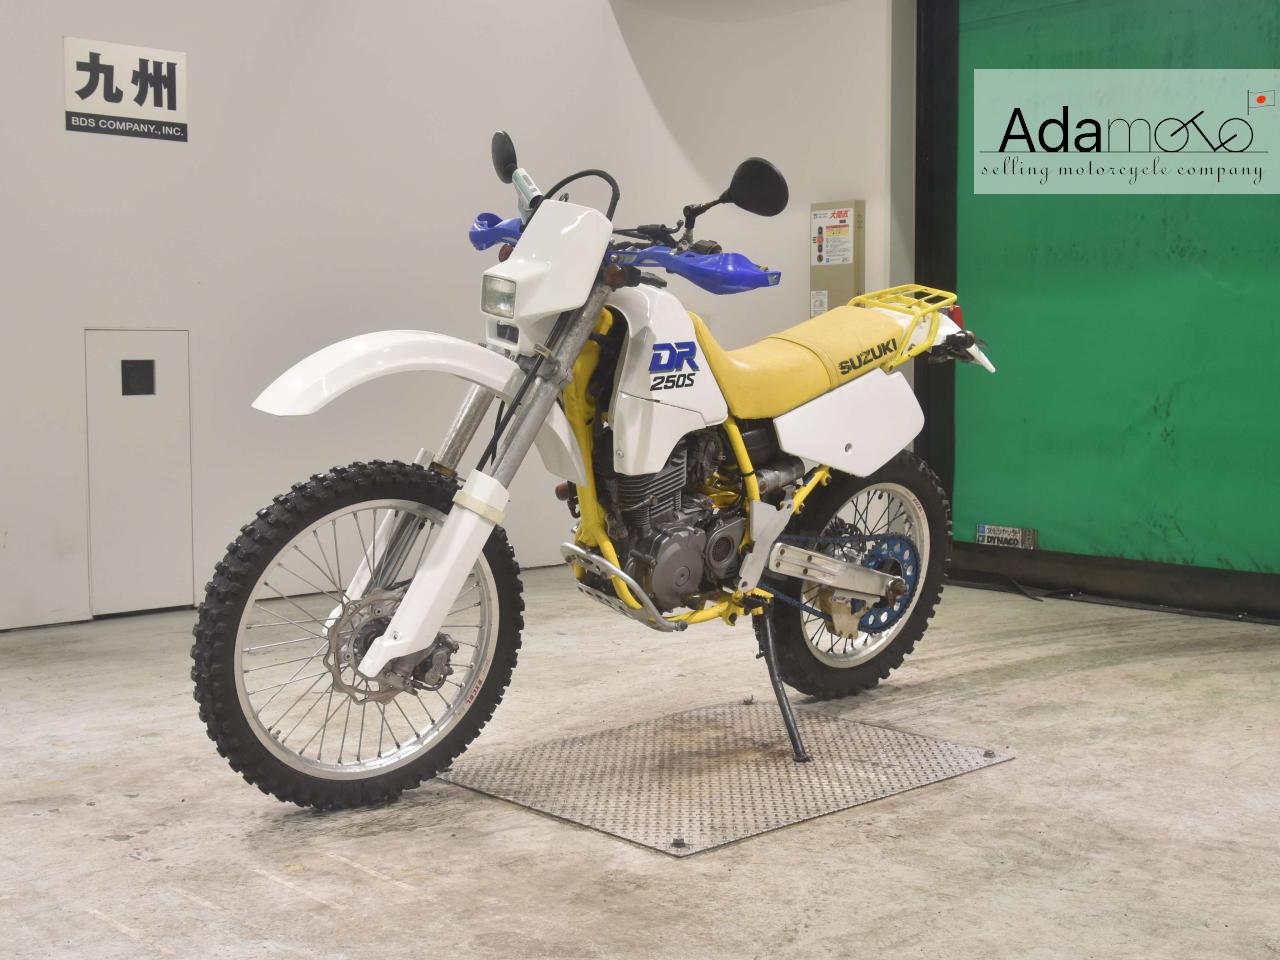 Suzuki DR250S - Adamoto - Motorcycles from Japan